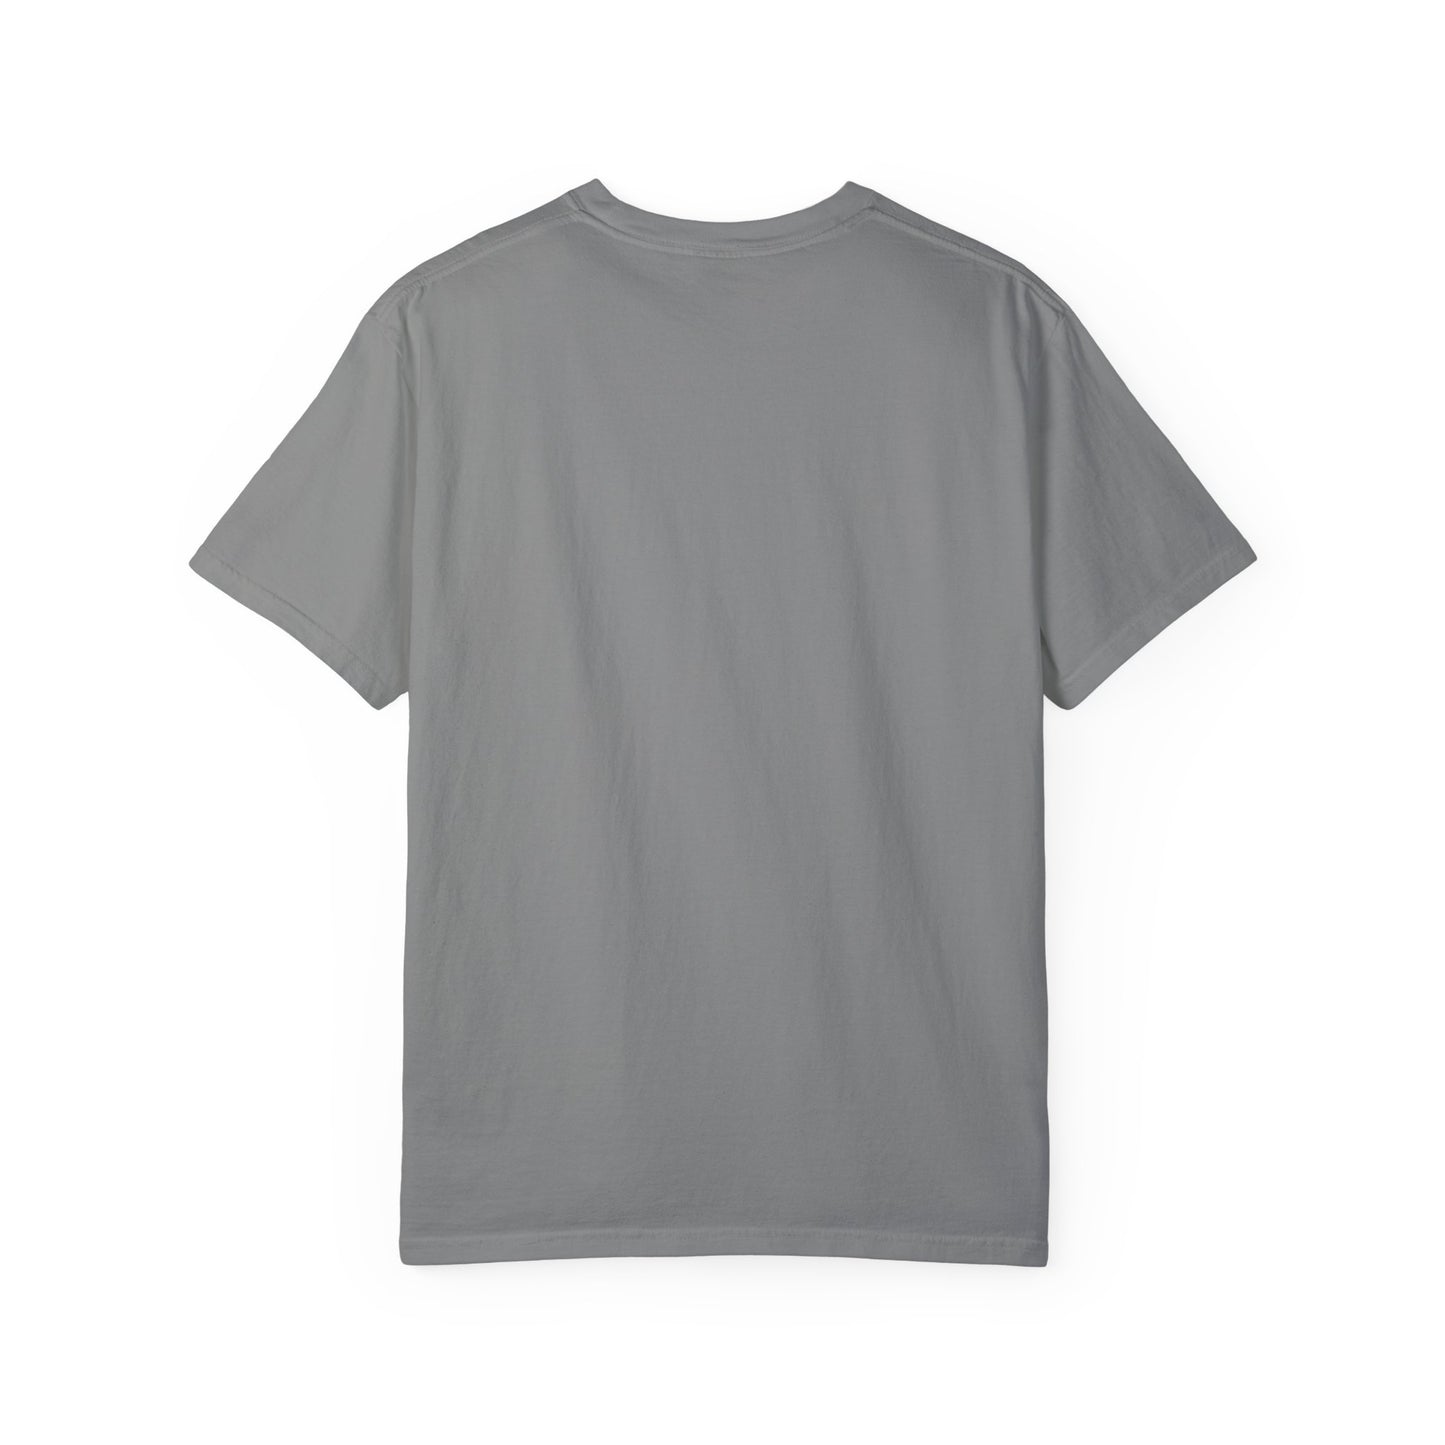 Hip Hop Teddy Bear Graphic Unisex Garment-dyed T-shirt Cotton Funny Humorous Graphic Soft Premium Unisex Men Women Granite T-shirt Birthday Gift-25